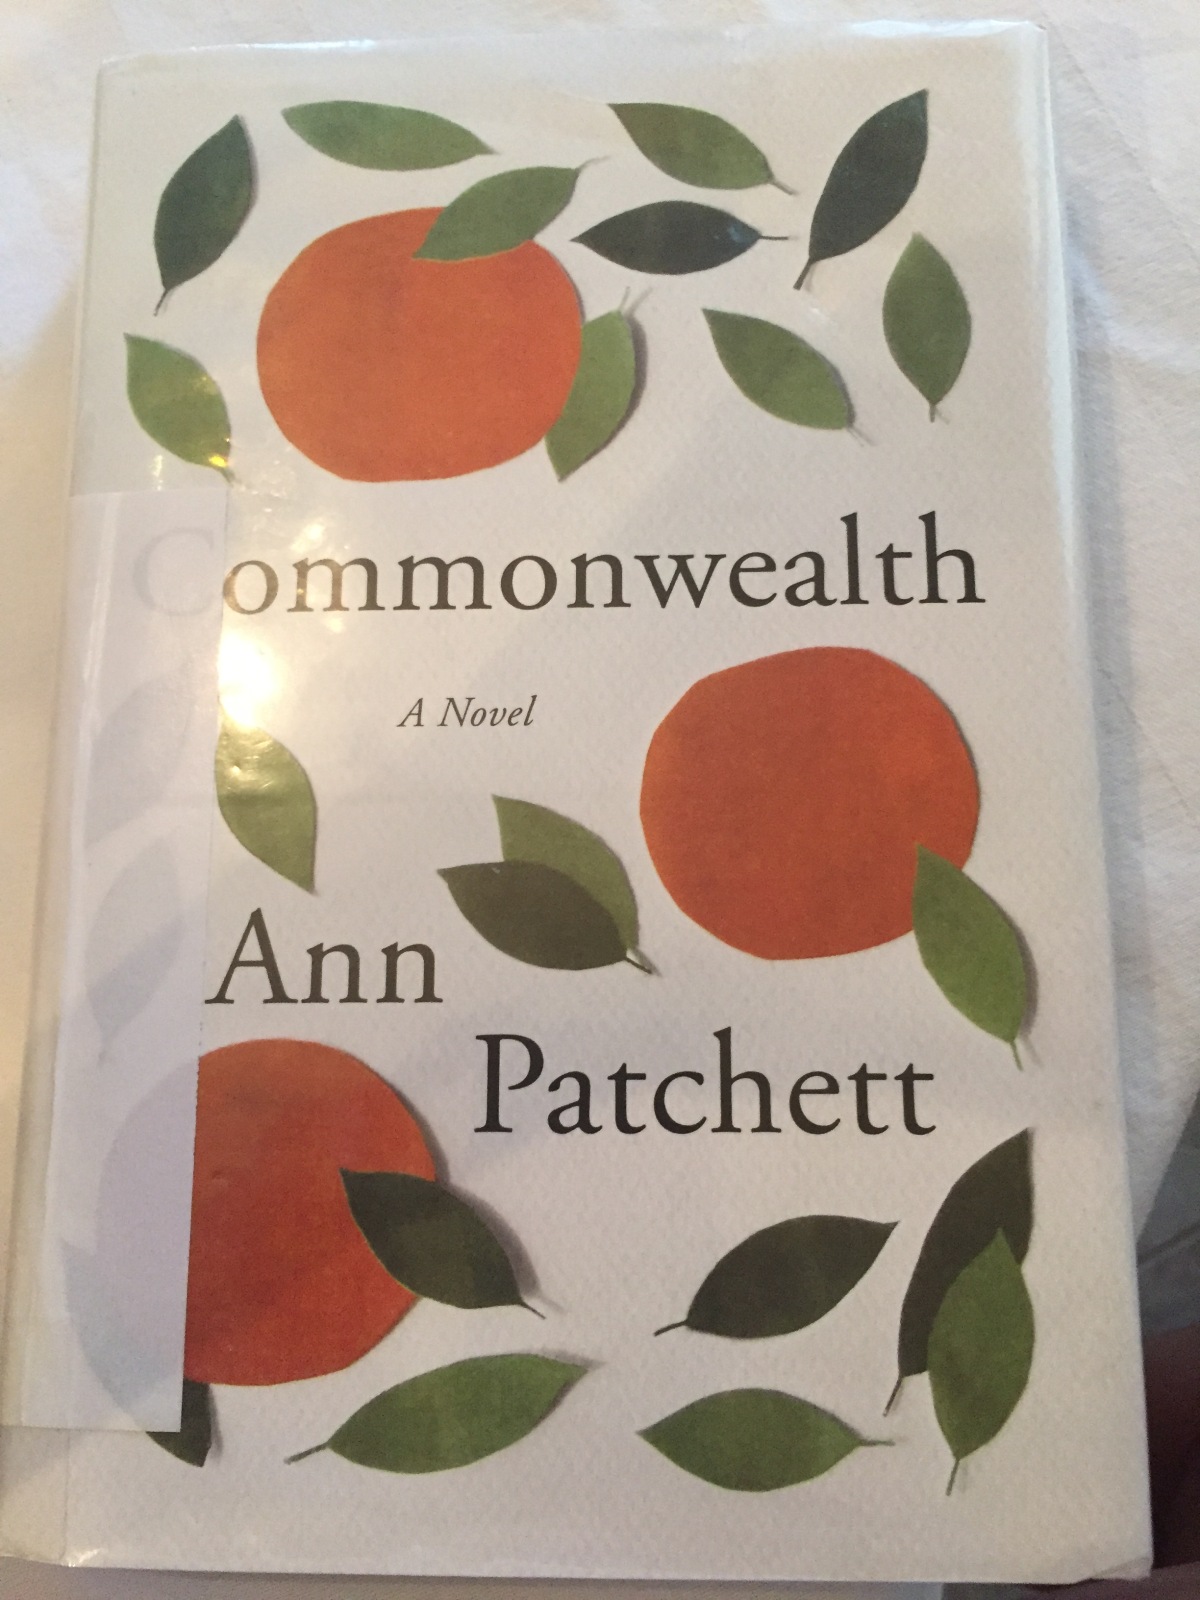 Beach House Book #7 – Commonwealth by Ann Patchett